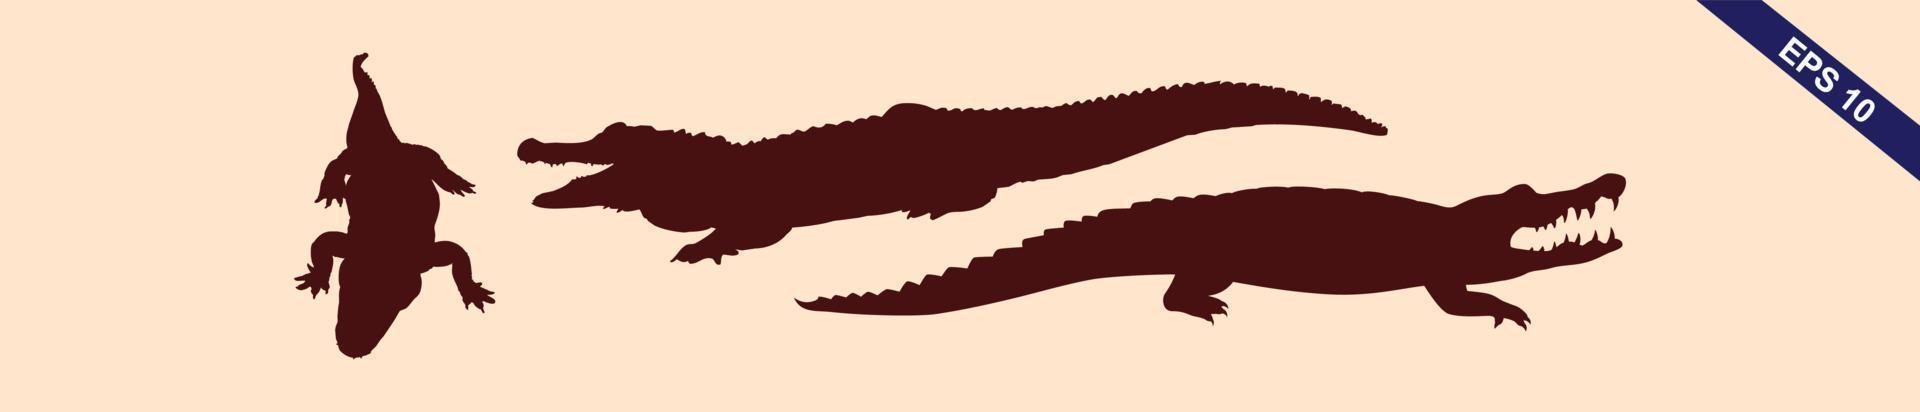 Crocodile and alligator silhouette set vector